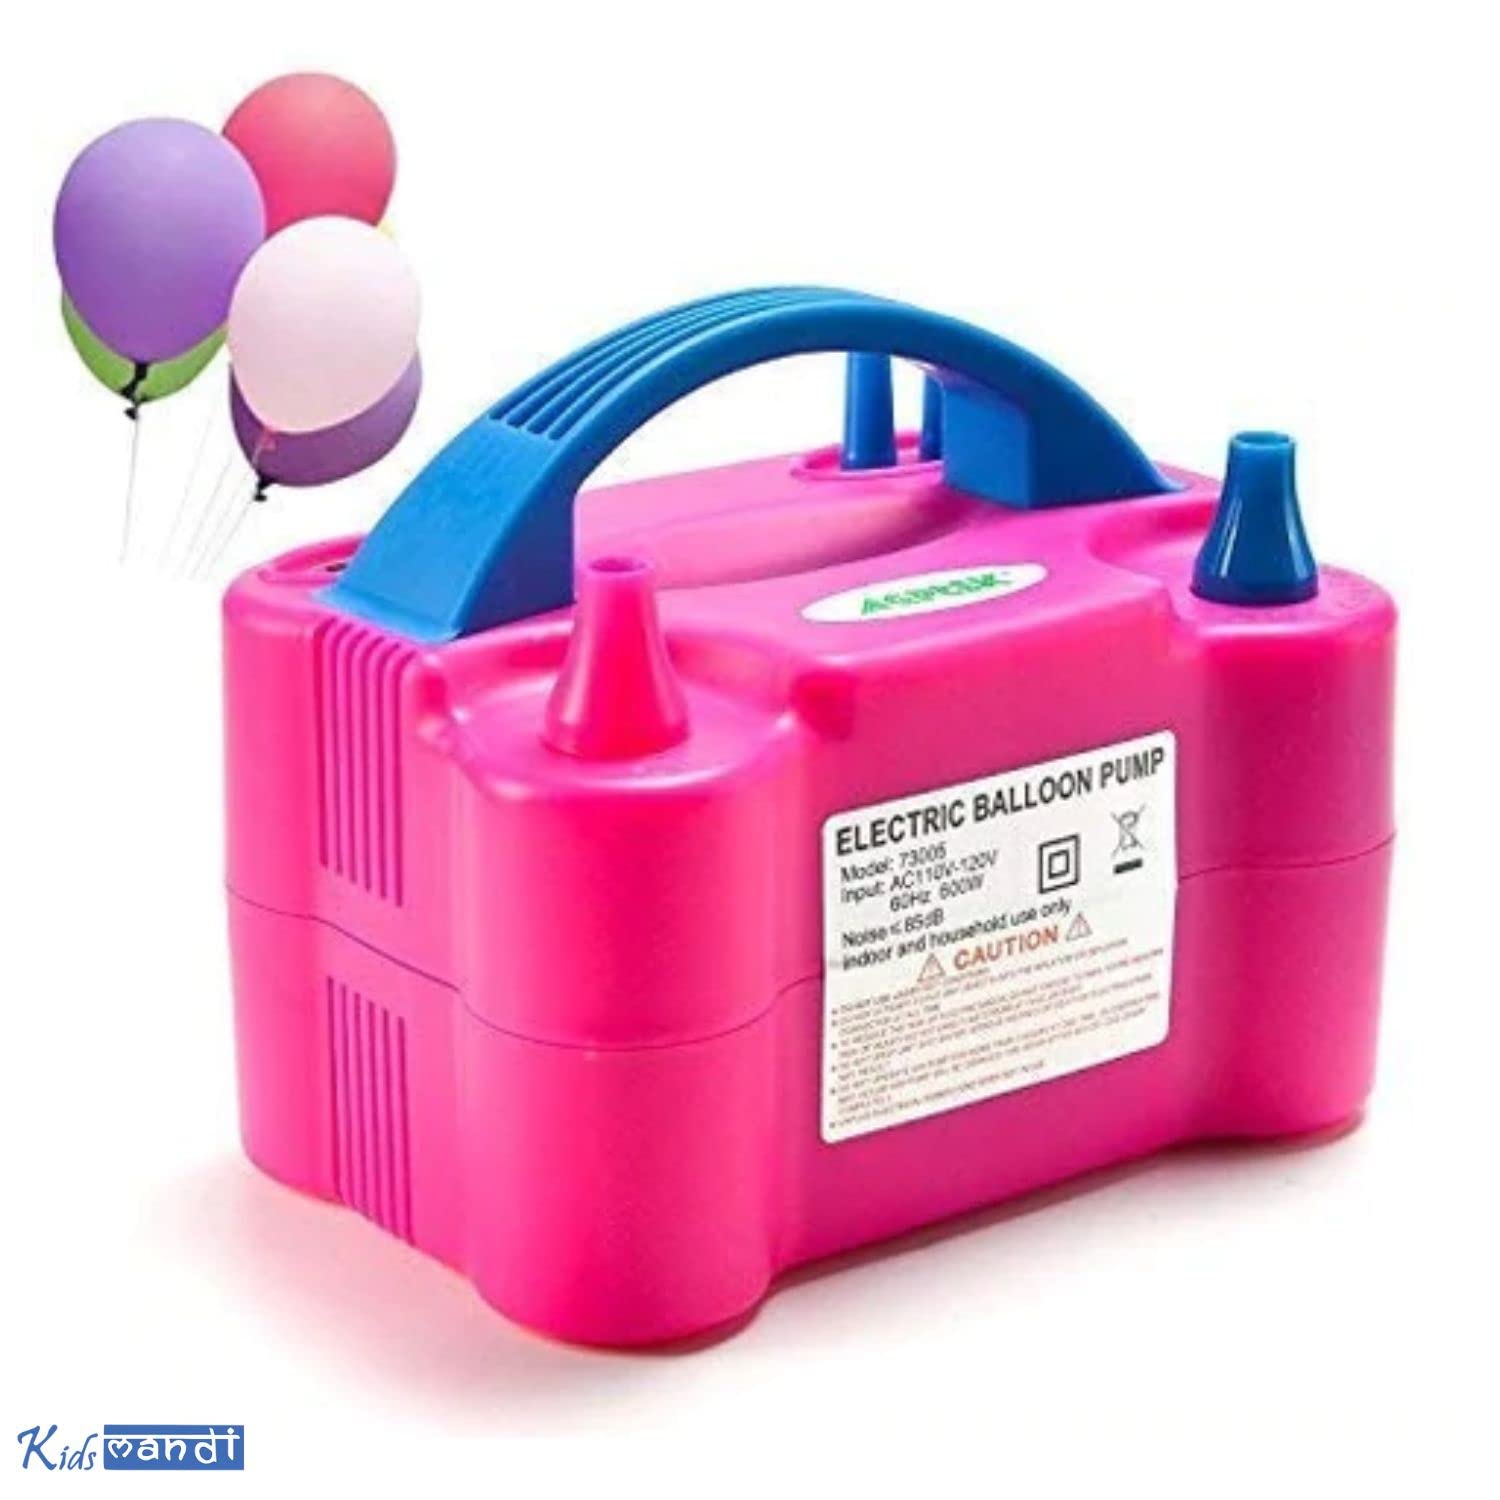 Kids Mandi portable electric air balloon pump with dual nozzle.